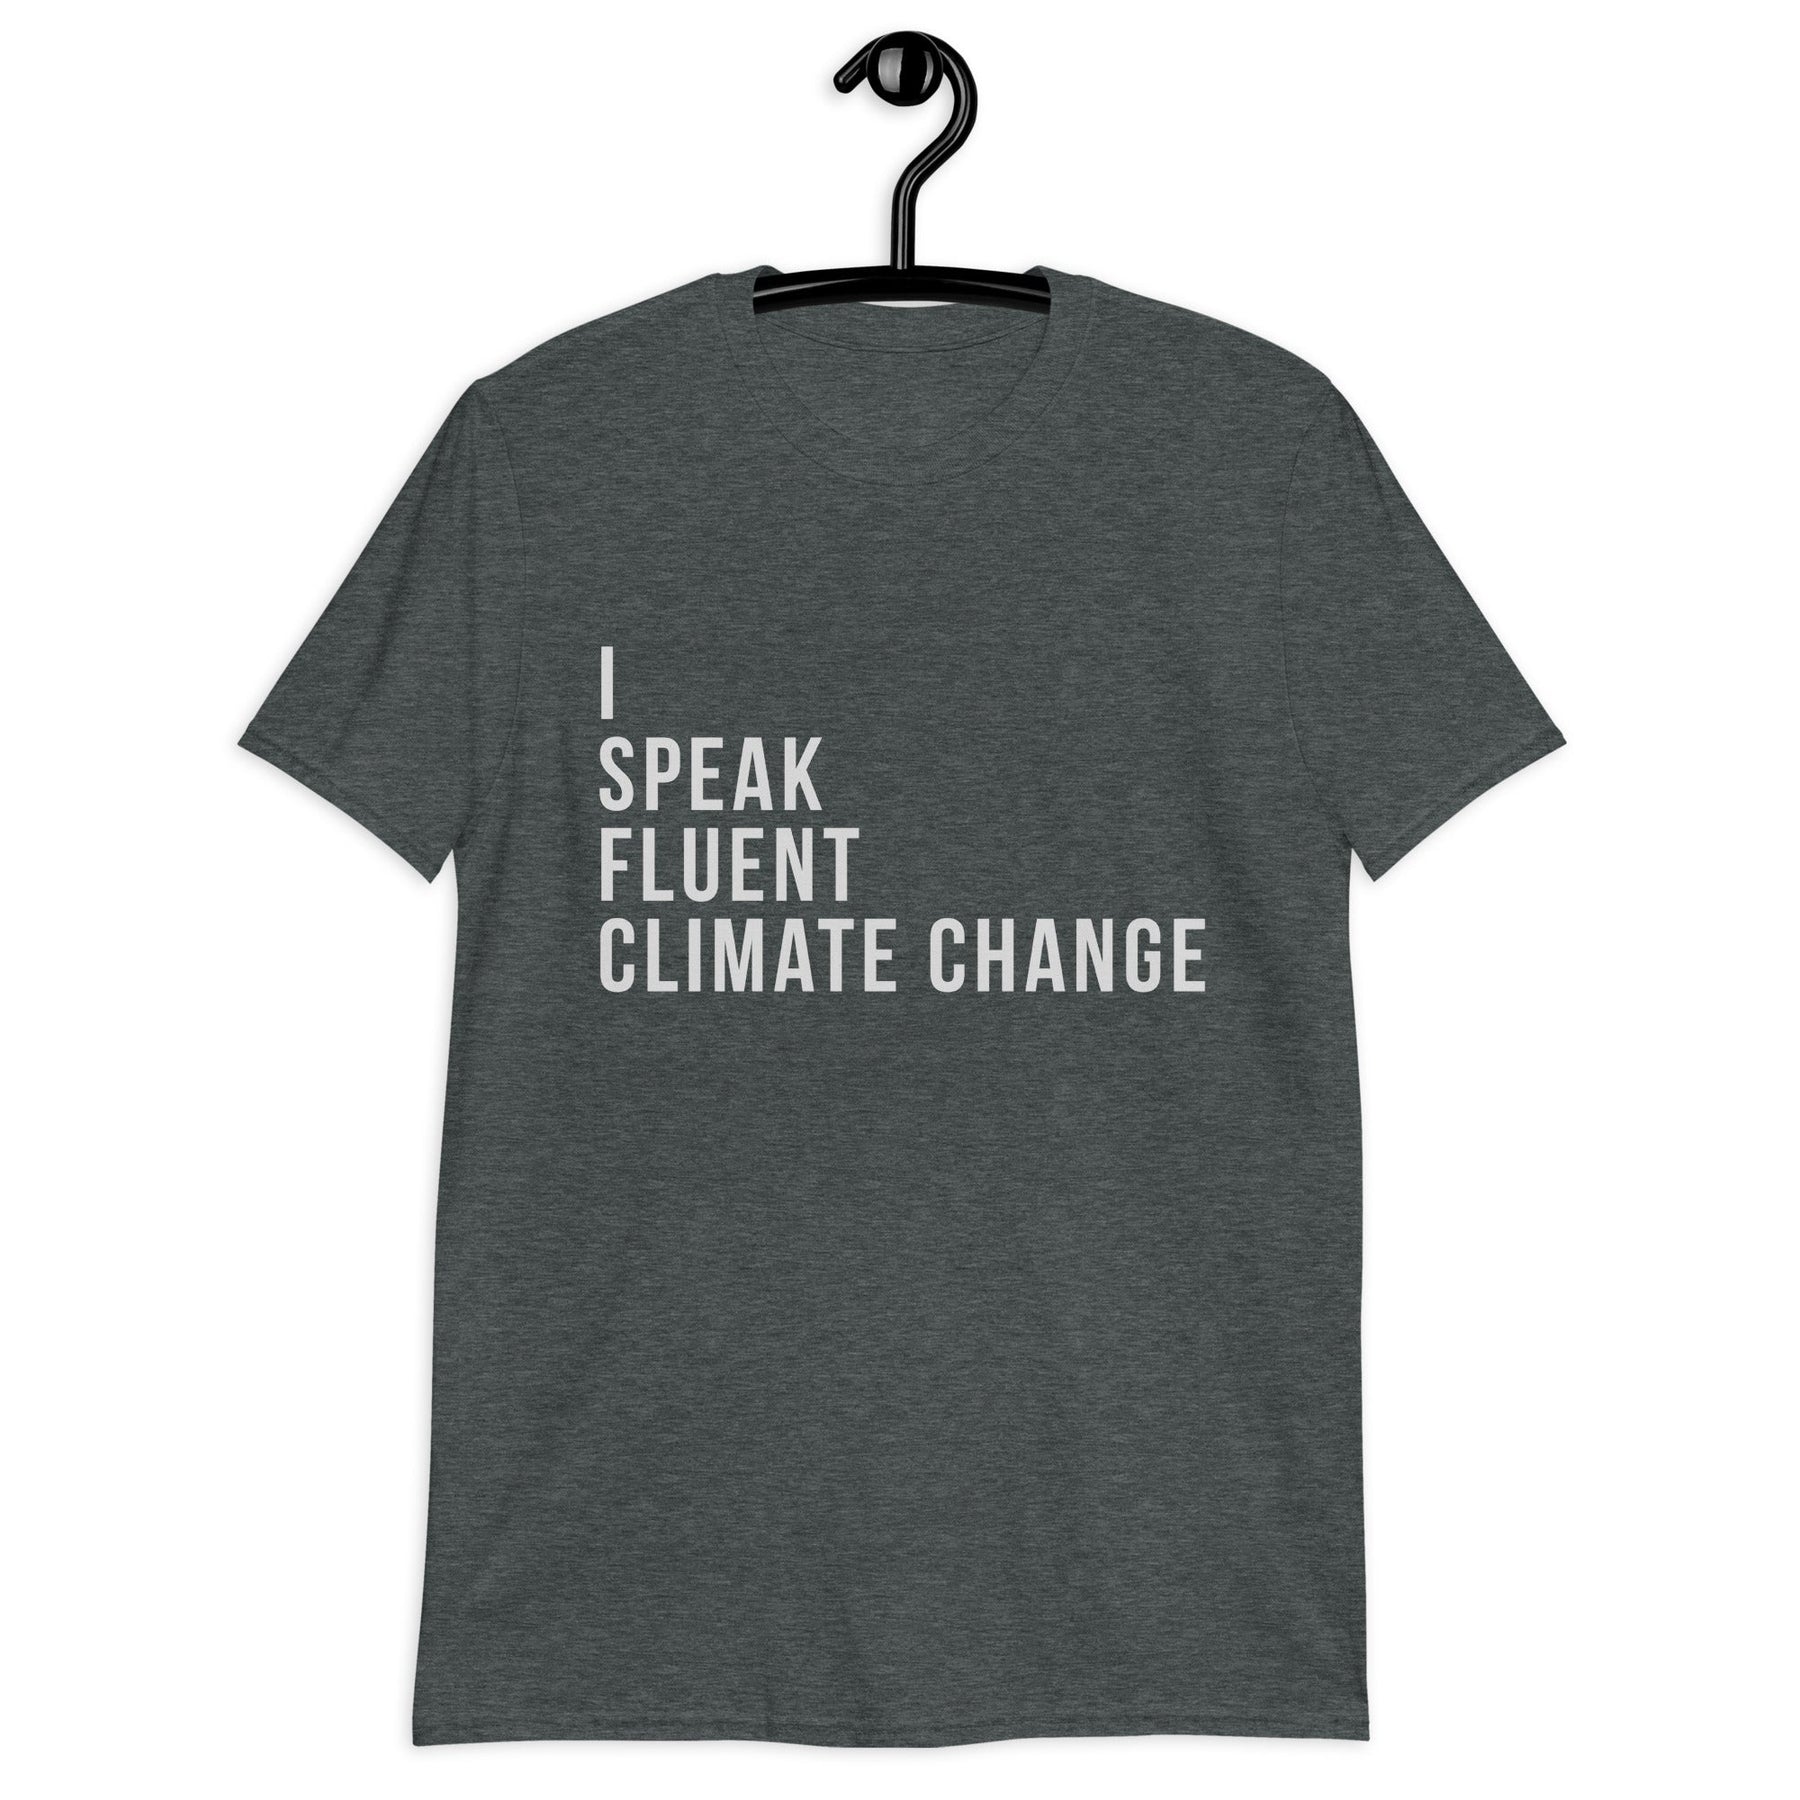 I SPEAK FLUENT CLIMATE CHANGE Short-Sleeve  T-Shirt